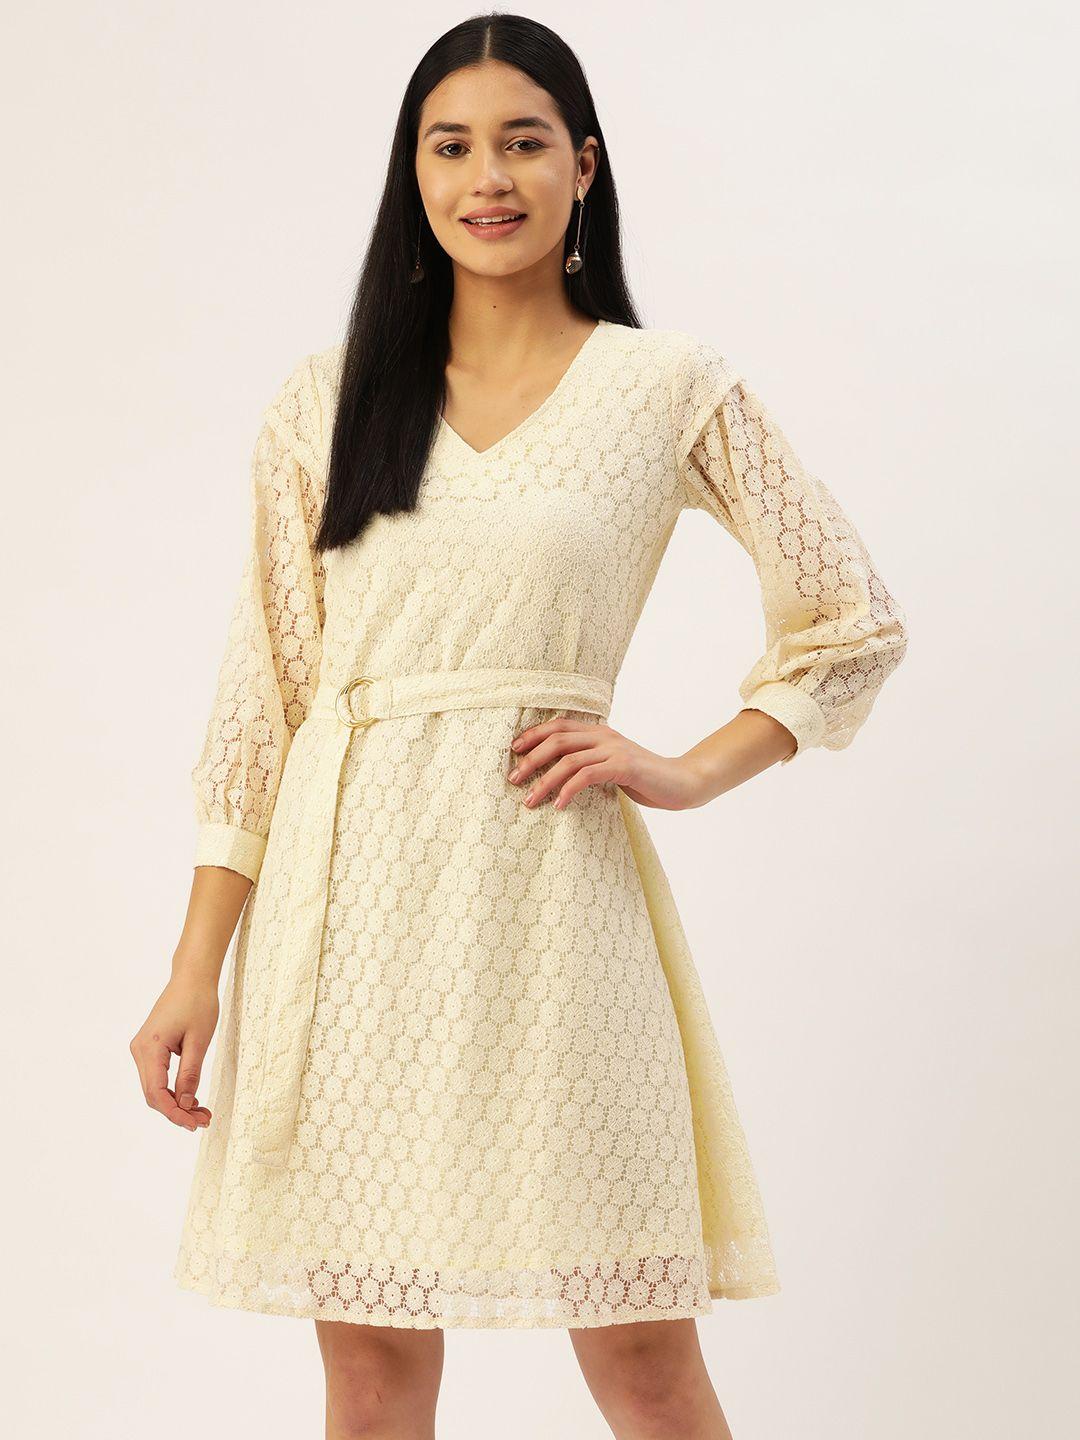 jainish beige a-line cotton dress